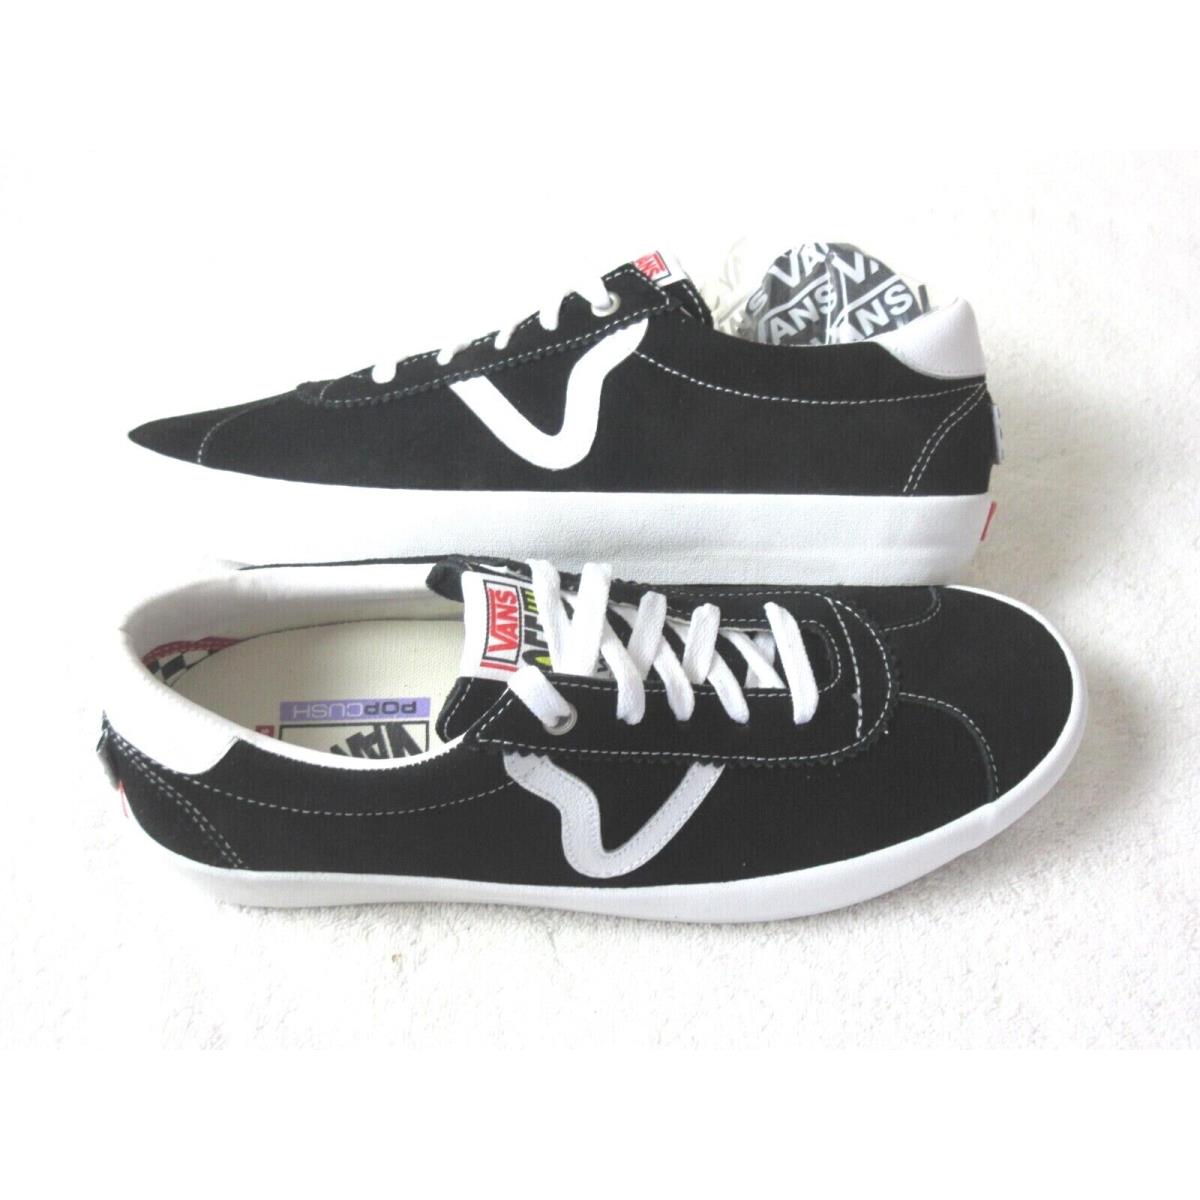 Vans Sport Men`s Black White Suede Skate Casual Shoes Size 9 VN0A5HEKY28